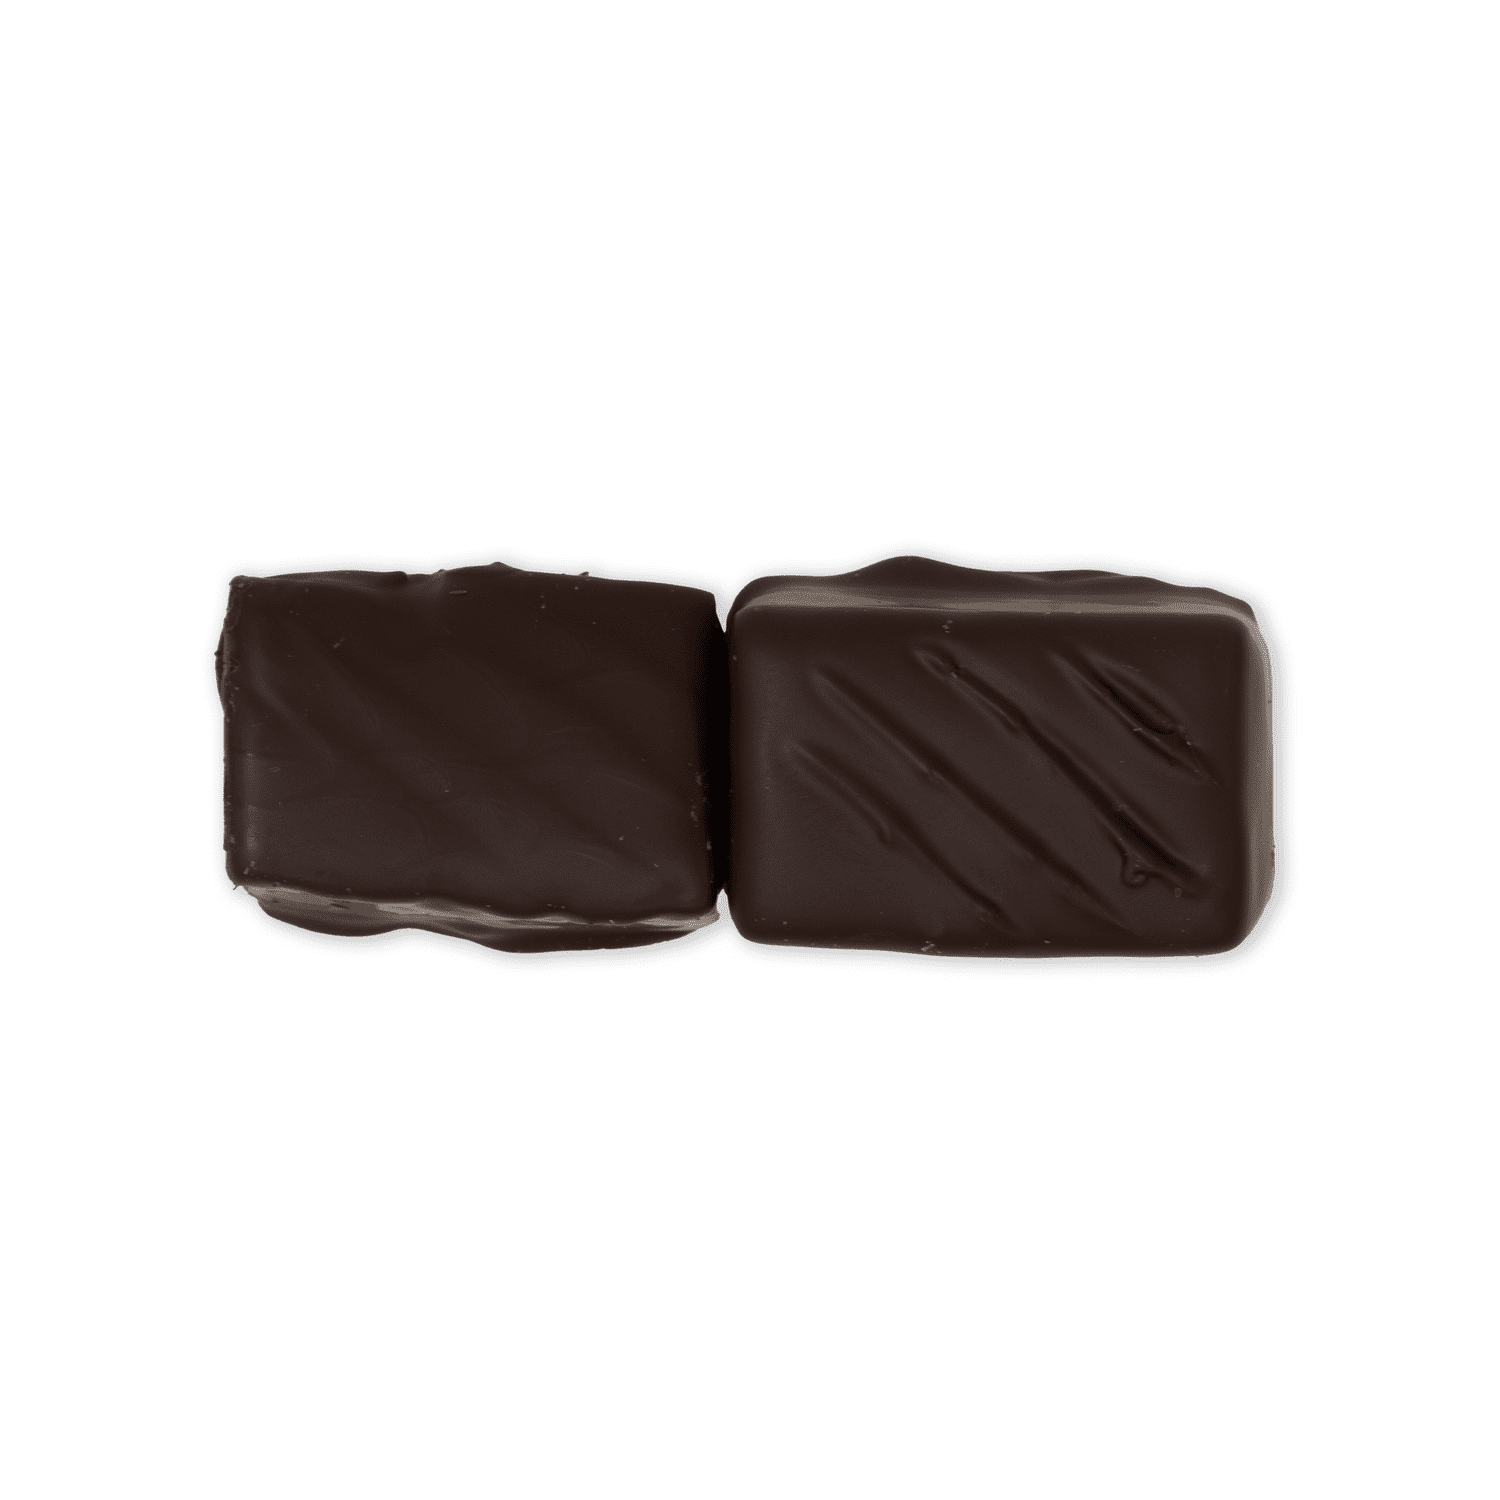 Chocolate Covered Vanilla Marshmallows